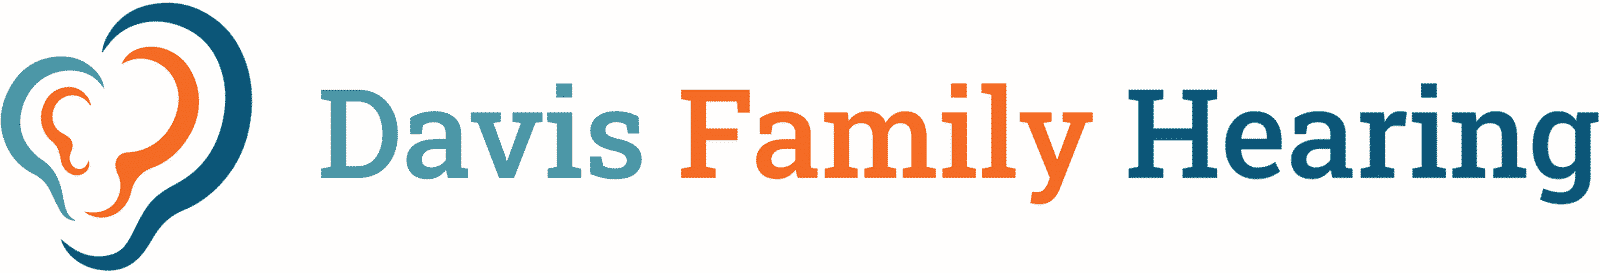 Davis Family Hearing logo